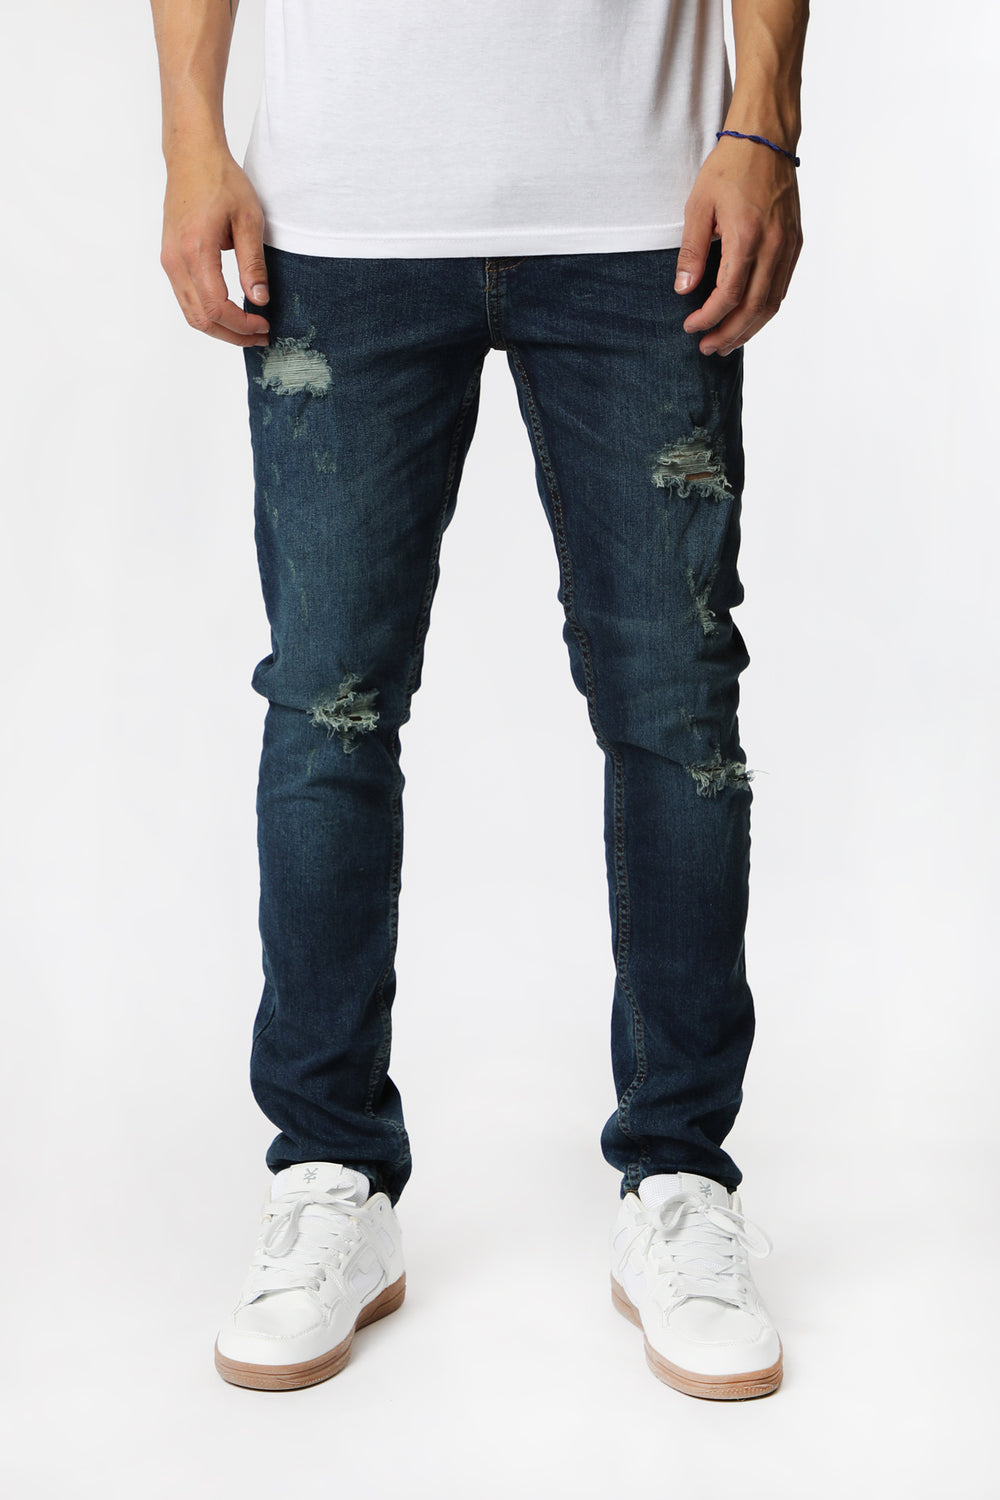 West49 Mens Distressed Skinny Jeans Rinse Denim